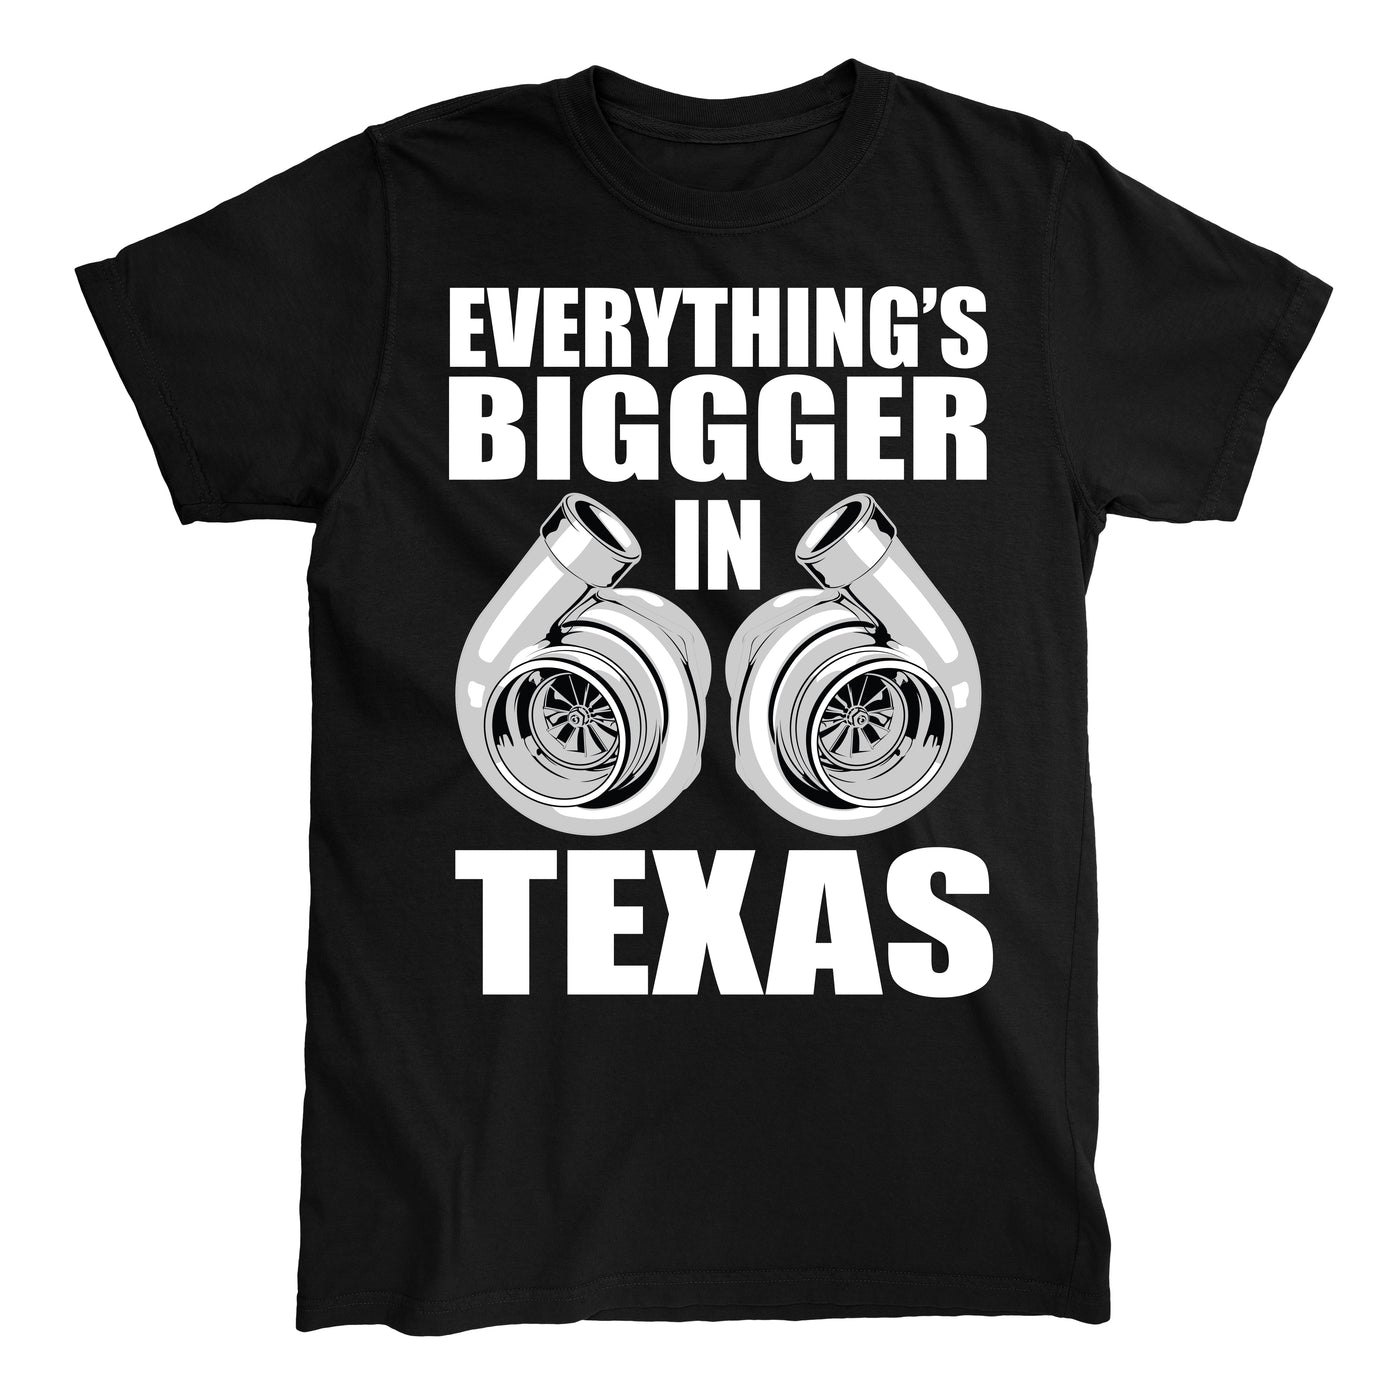 EVERYTHINGS BIGGGER IN TEXAS T-shirt